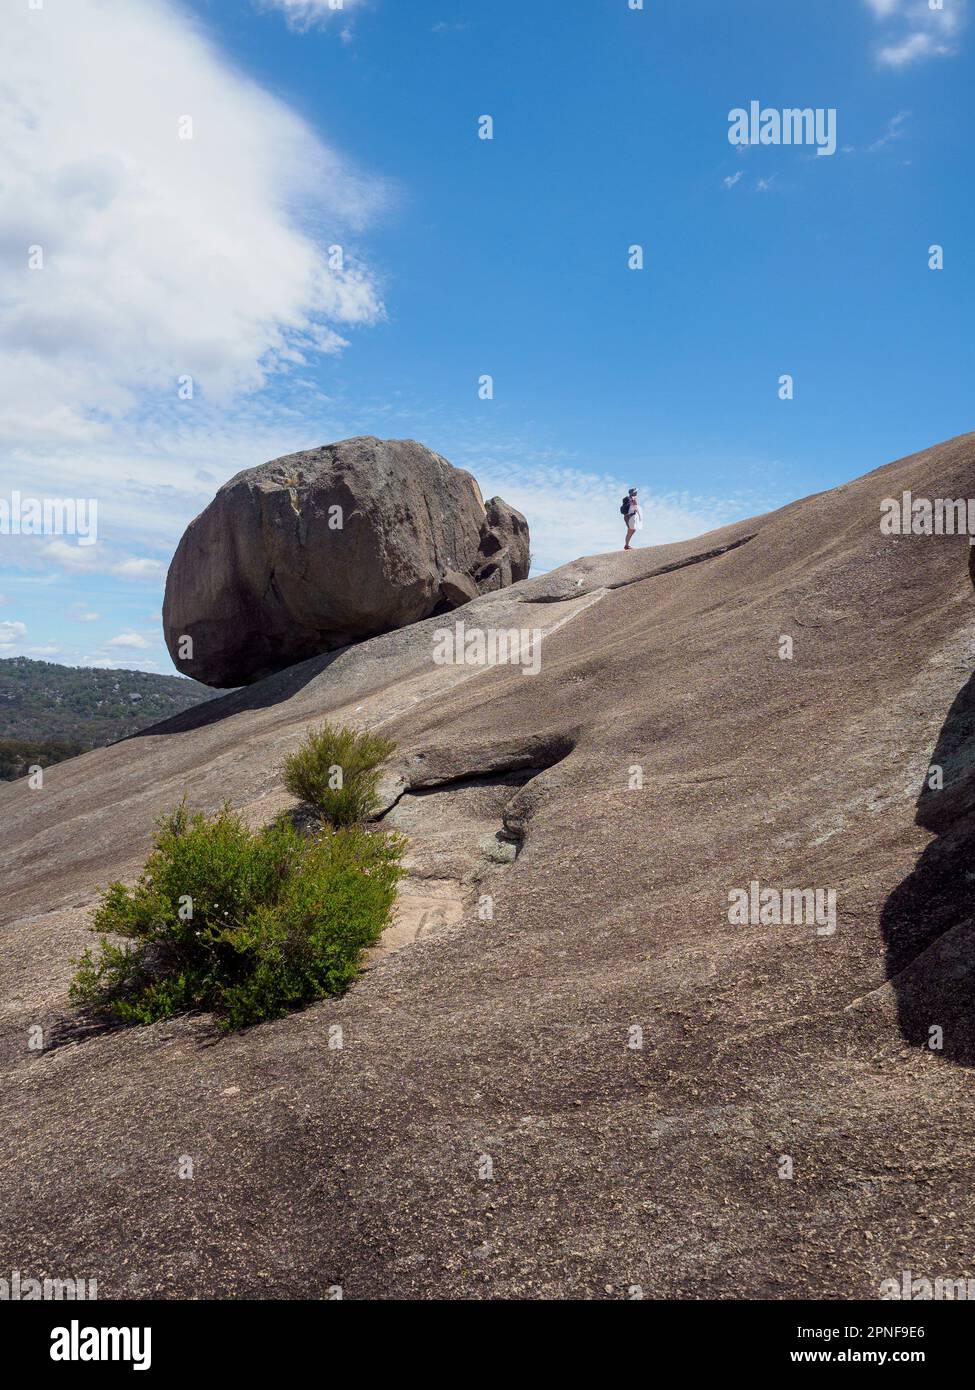 Australia, Queensland, Girraween National Park, Woman hiking on rock formation Stock Photo